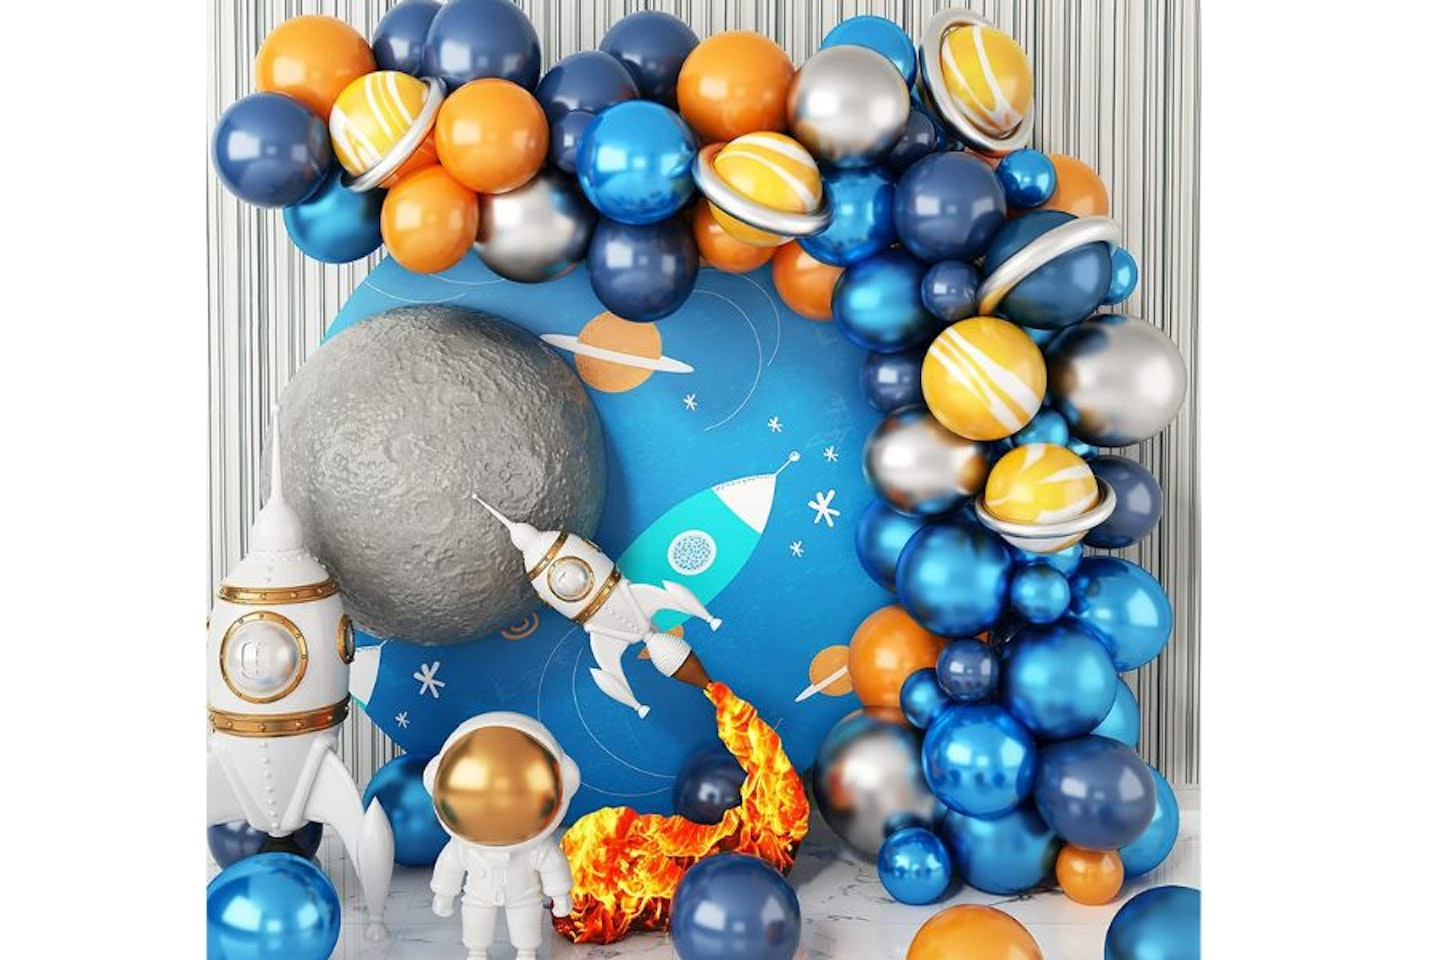 Space party ideas - KEPMOV Blue Balloon Arch Kit 